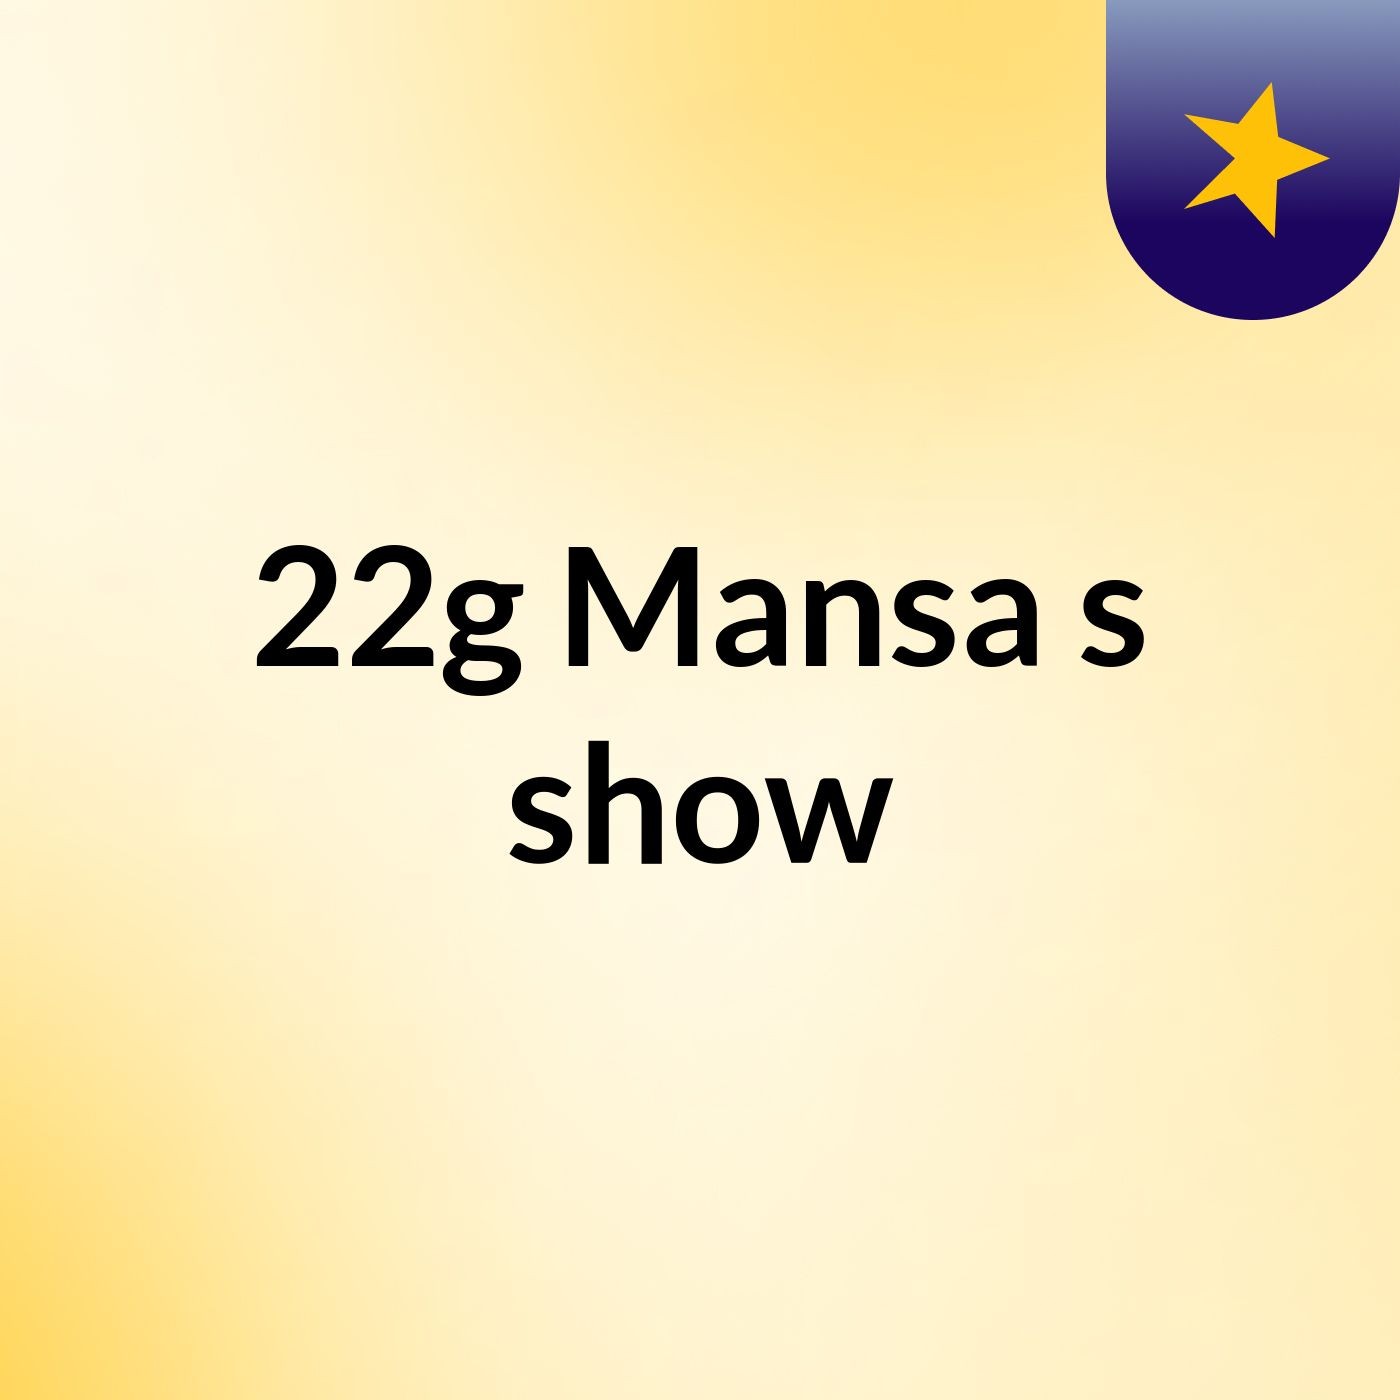 22g Mansa's show